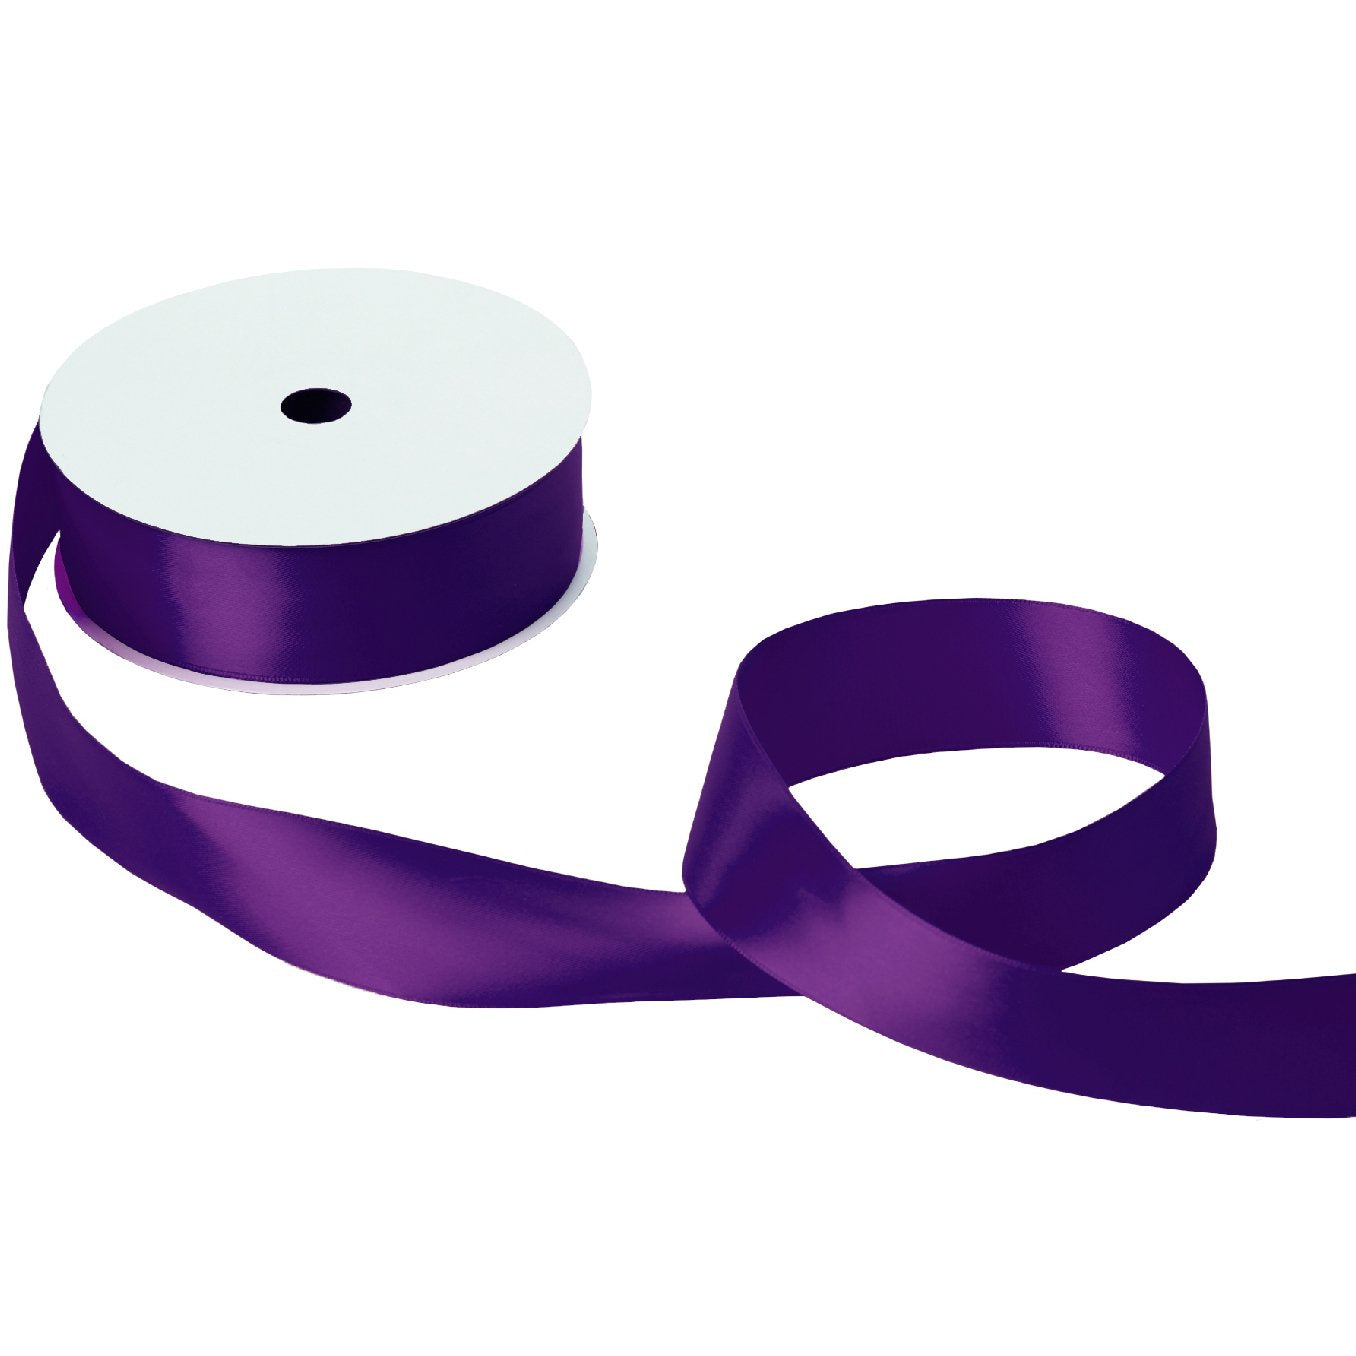 Jillson & Roberts Double-Faced Satin Ribbon, 1 1/2" Wide x 50 Yards, Purple